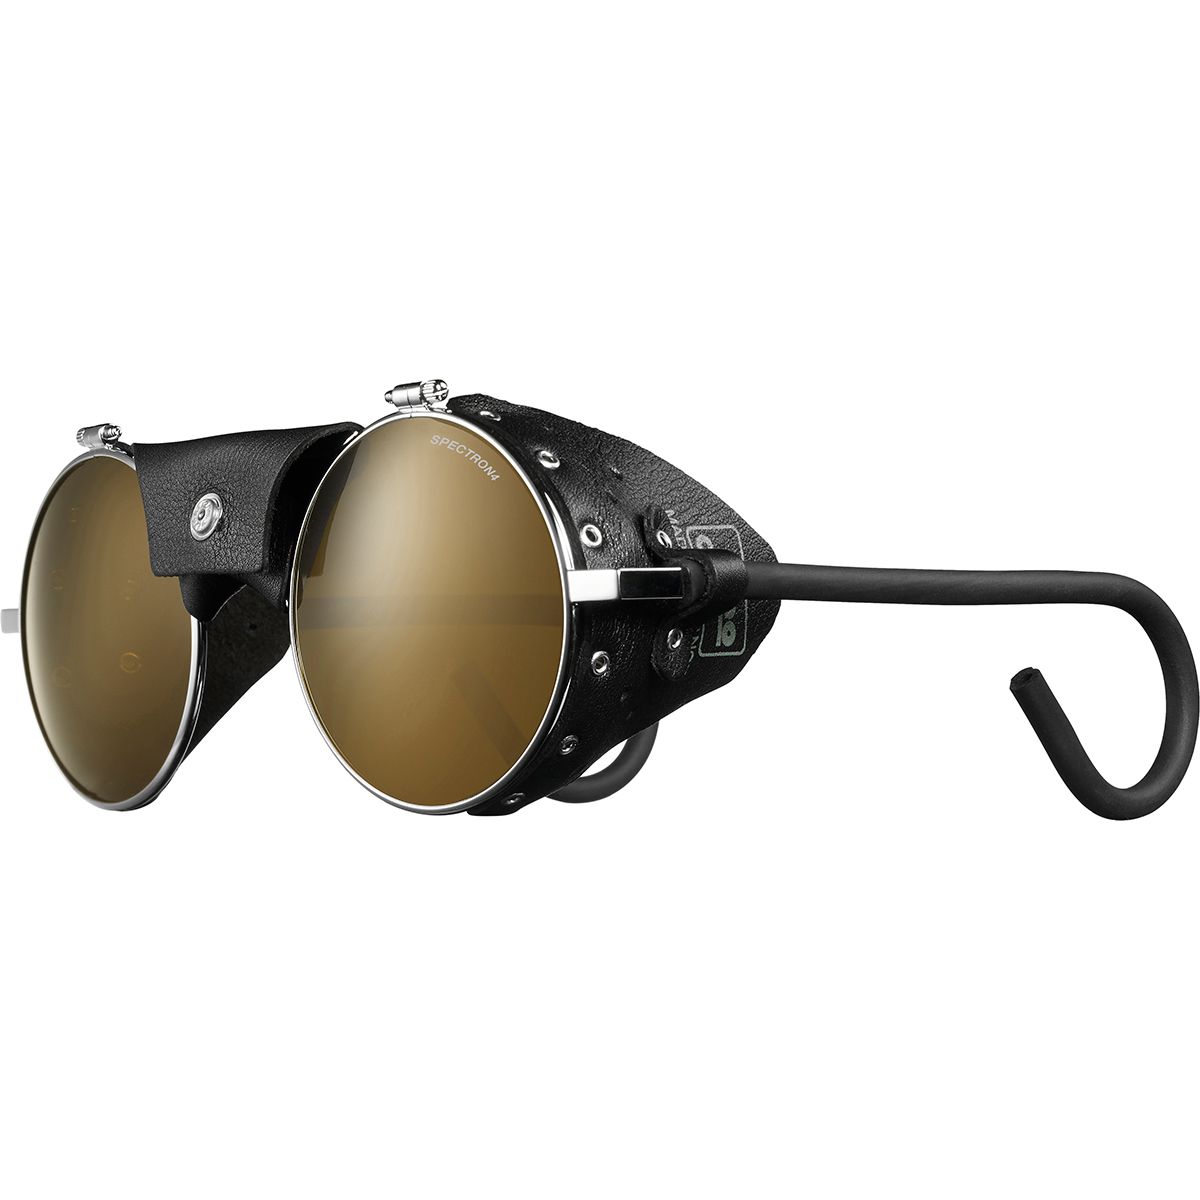 Julbo Vermont Spectron 4 Sunglasses Black, One Size - Men's